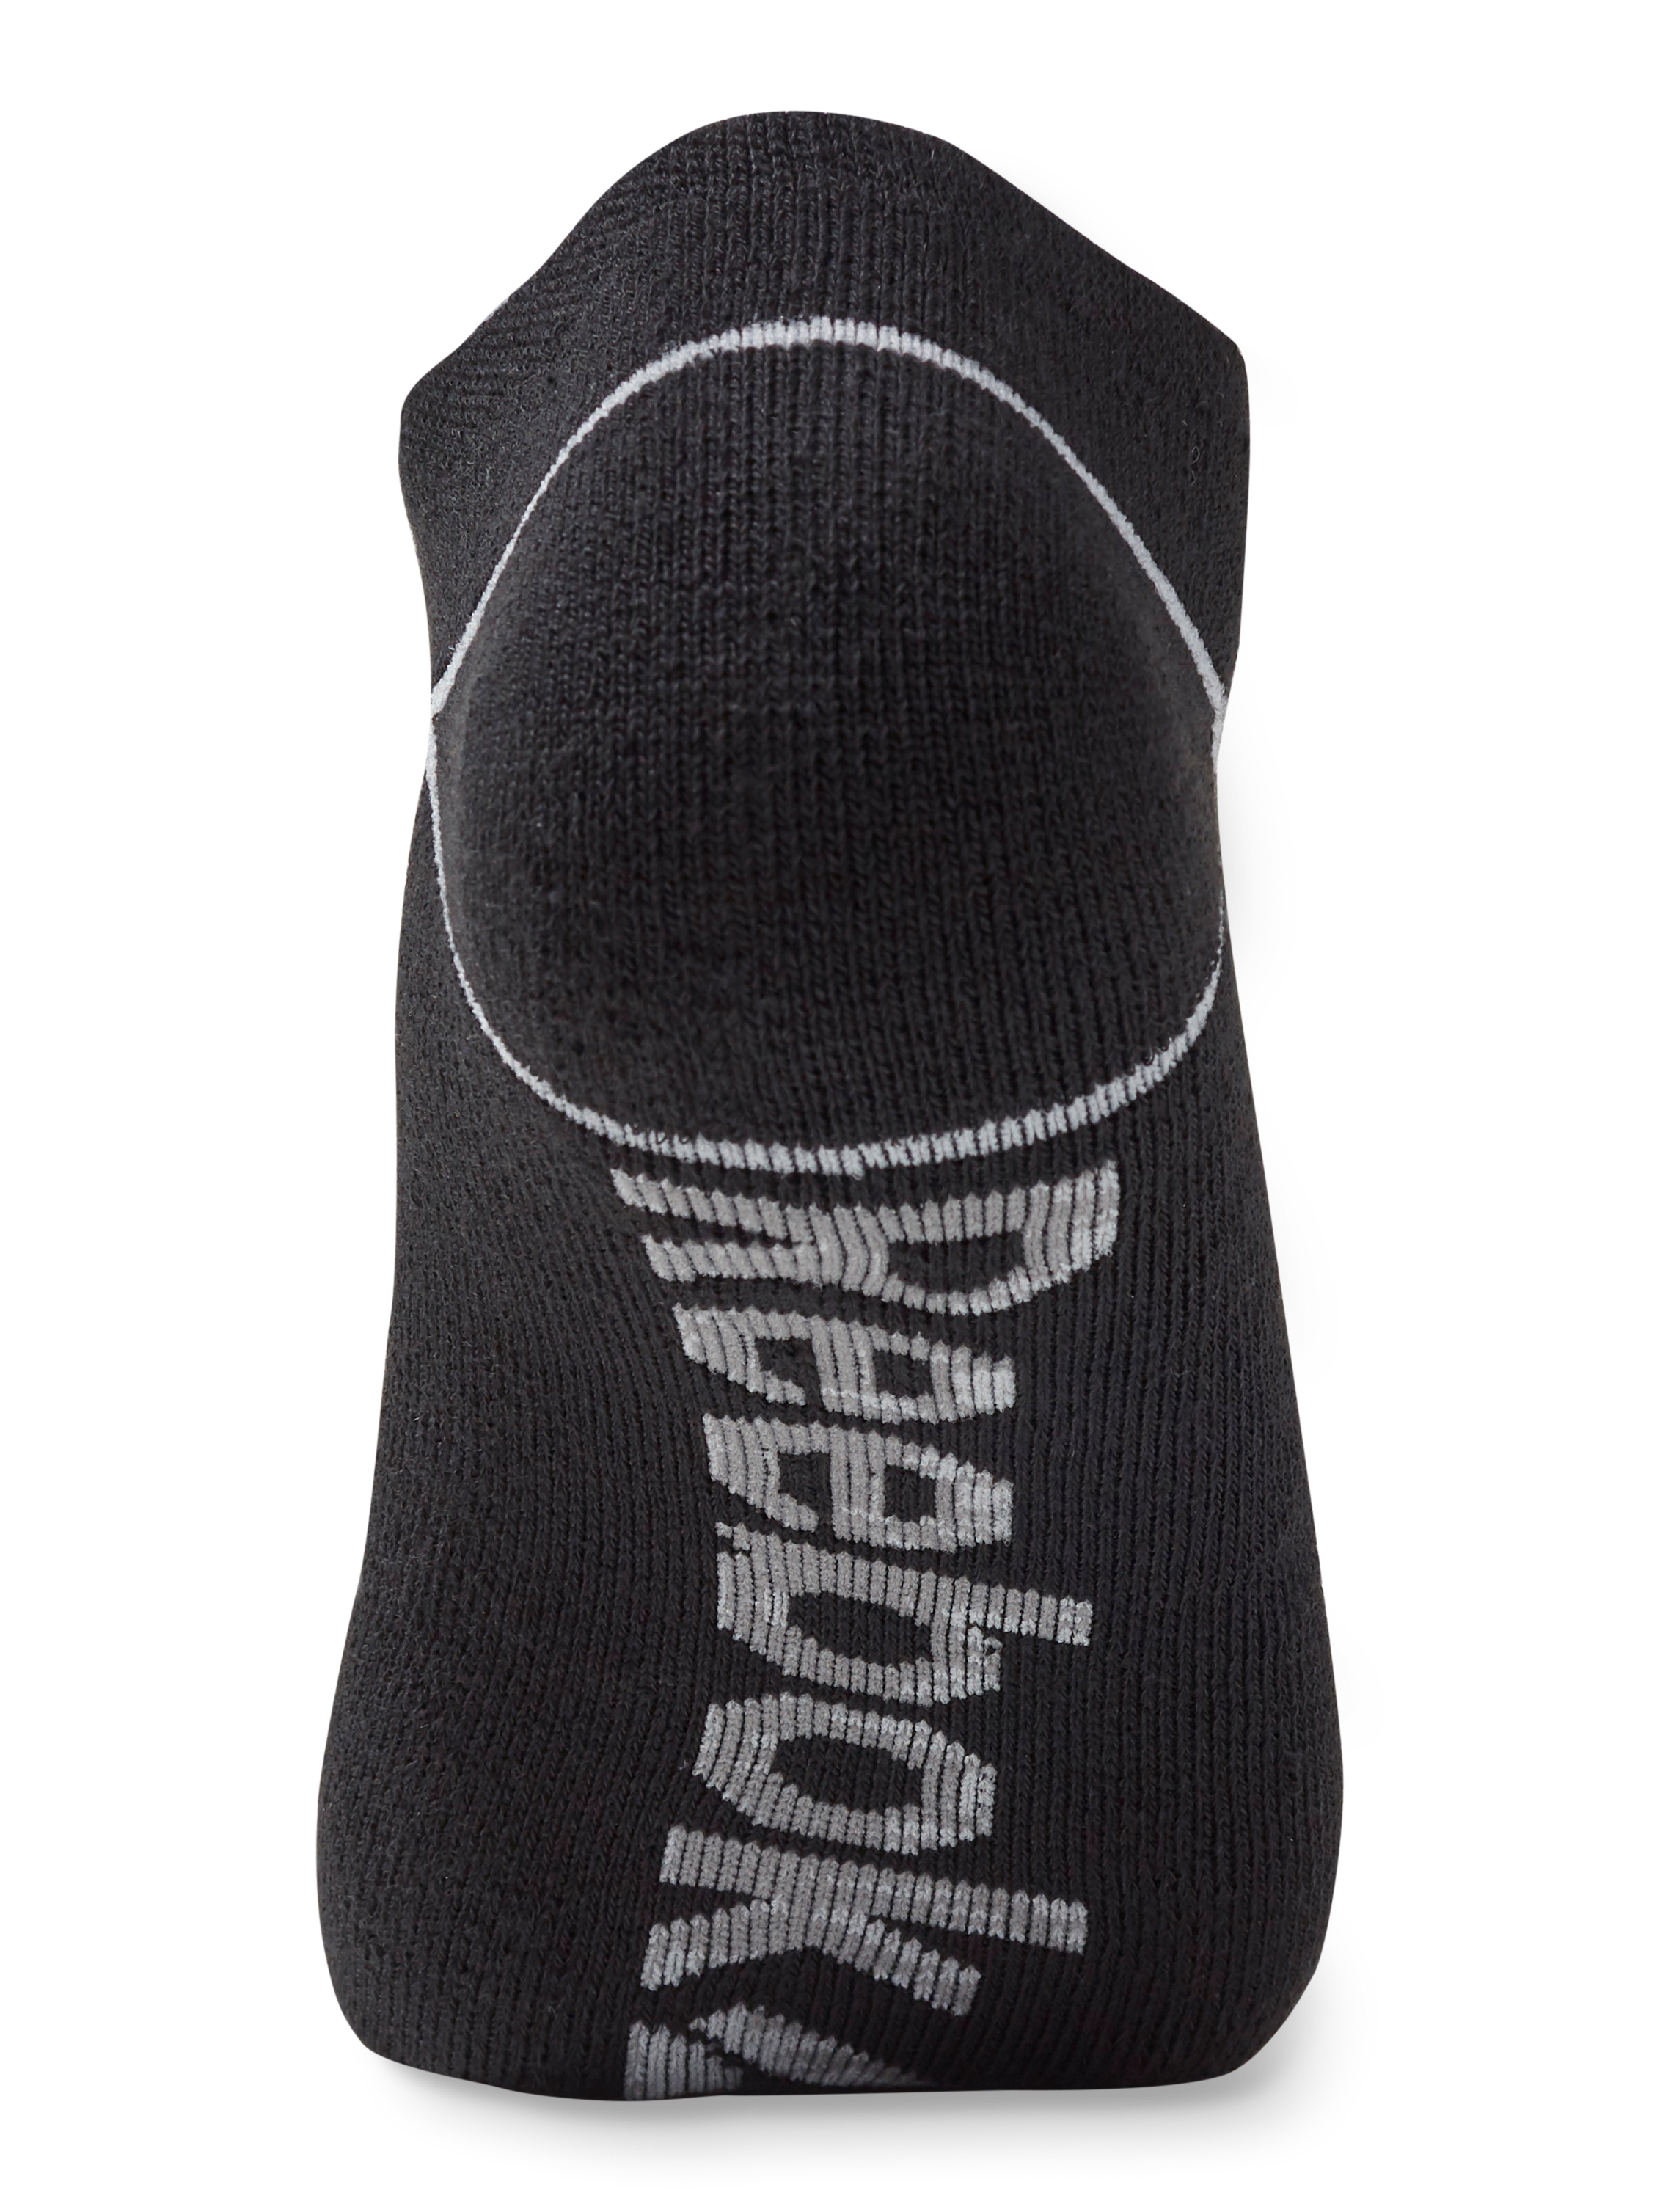 Reebok Men's Pro Series Low Cut Socks, 6-Pack - image 3 of 8